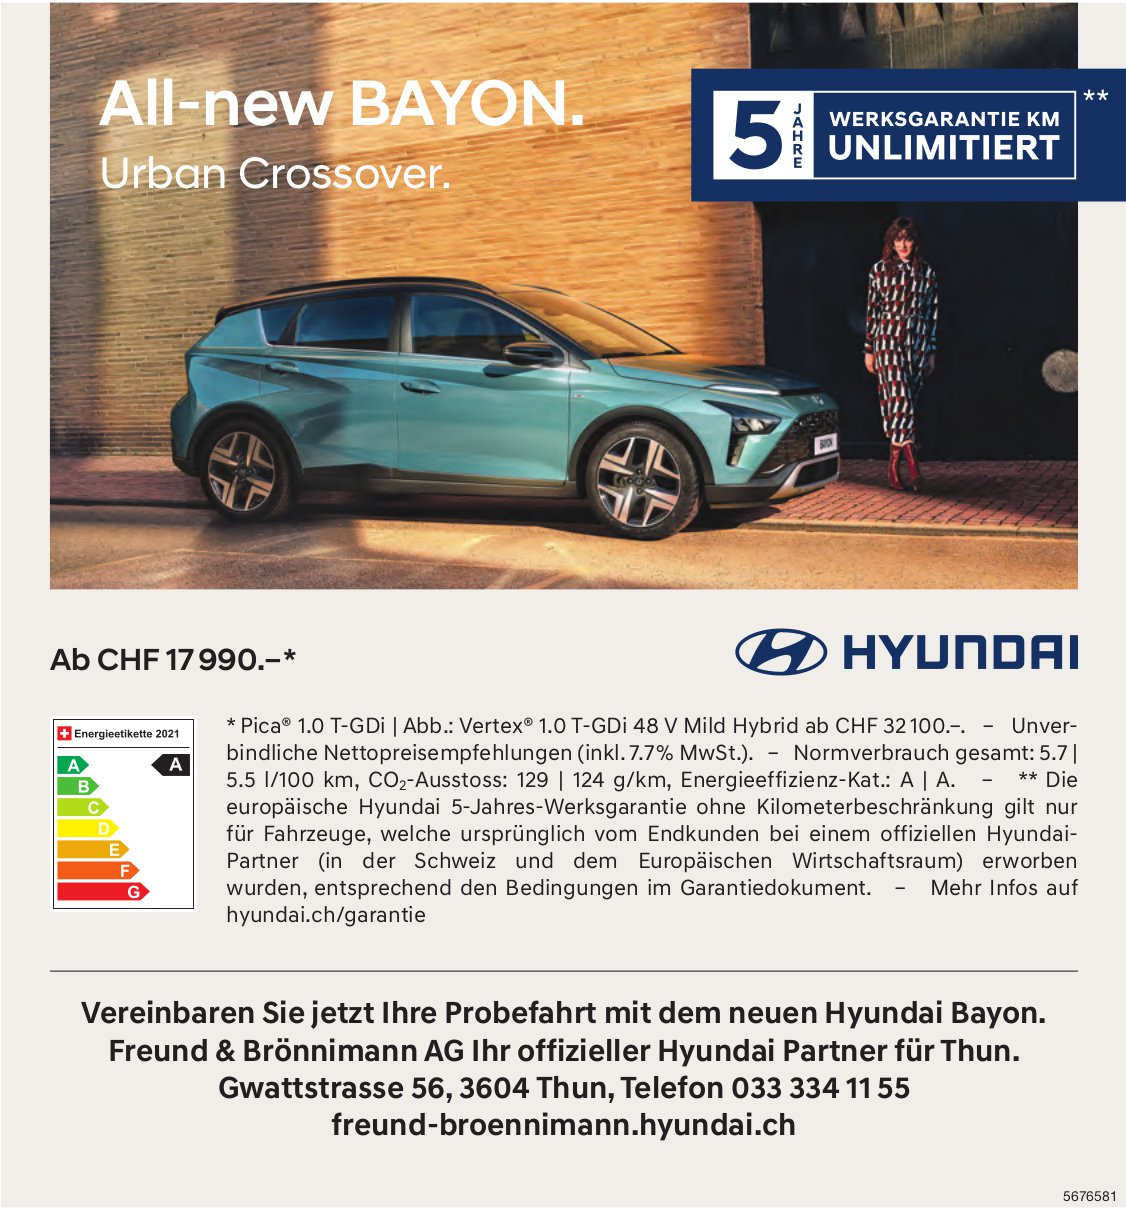 Freund & Brönnimann AG, Thun - Hyundai All-new BAYON. Urban Crossover